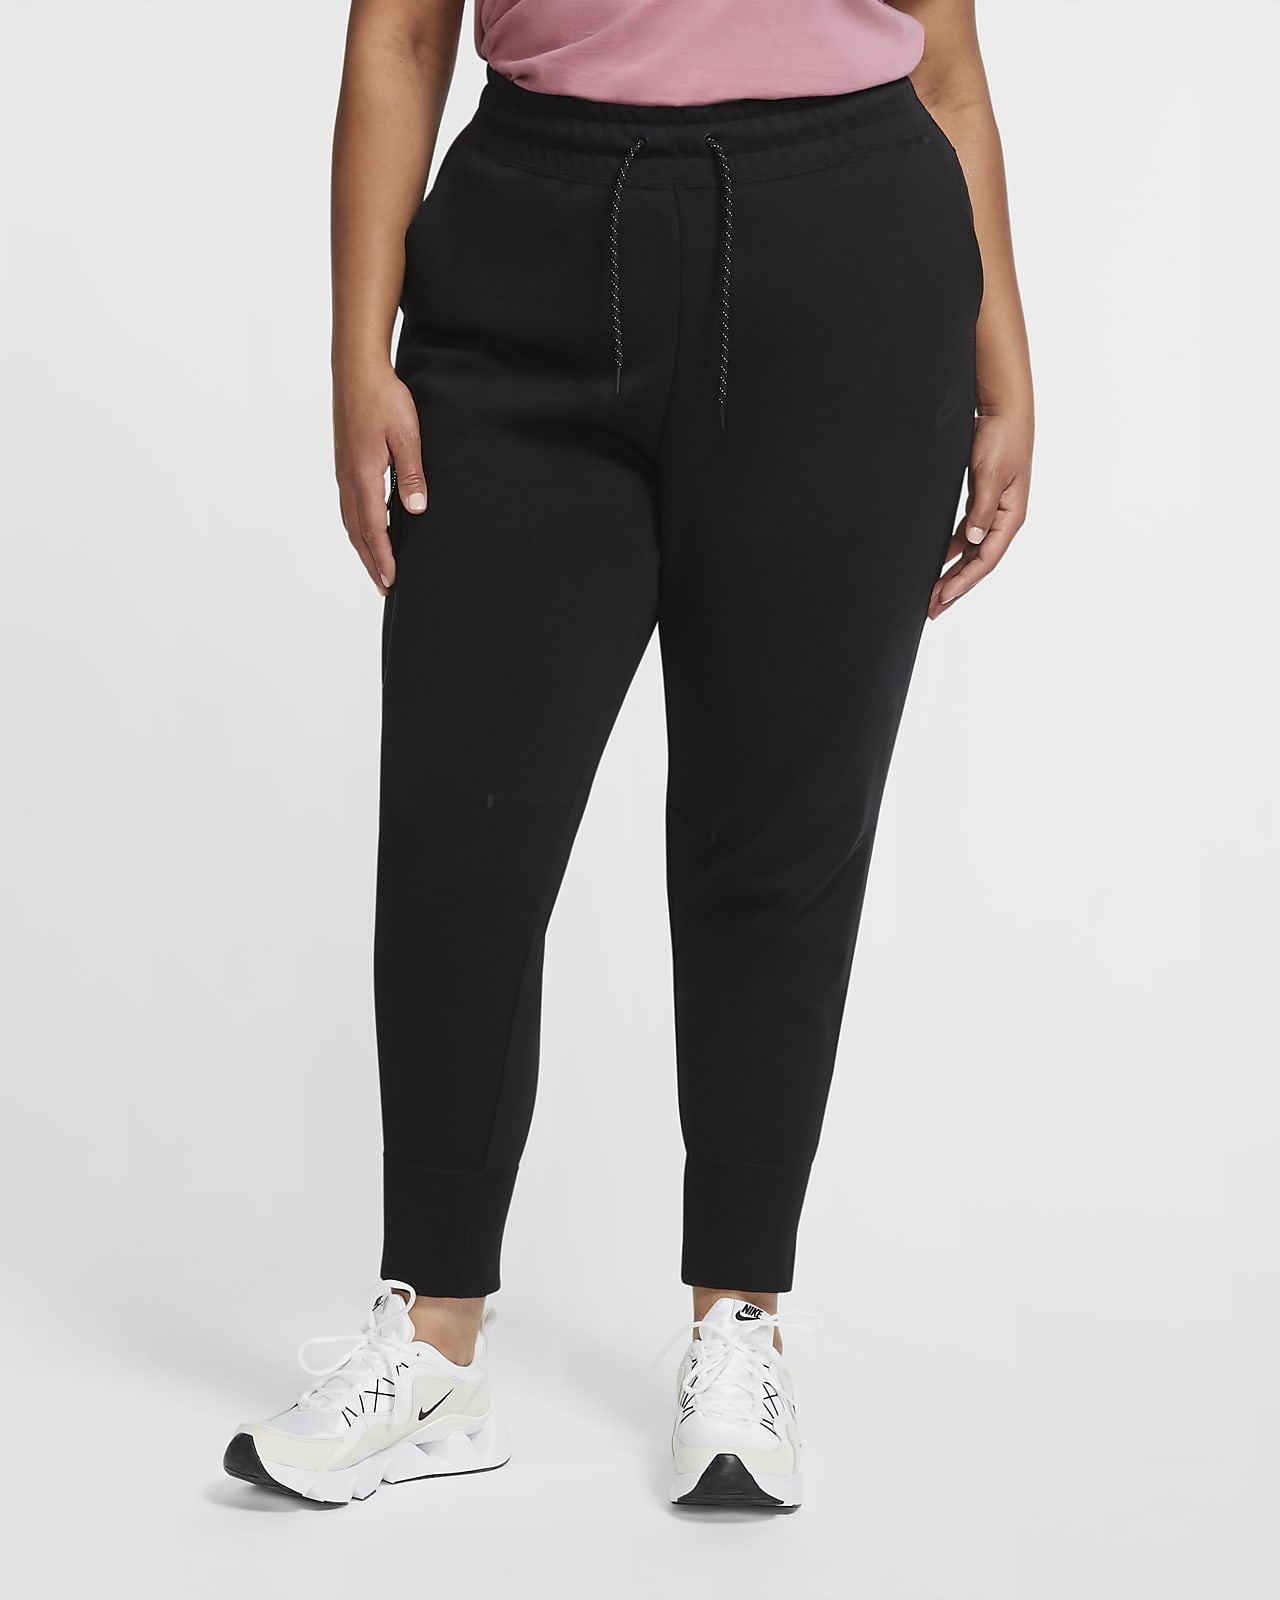 Pantalon Nike Sportswear Tech Fleece pour Femme (grande taille)